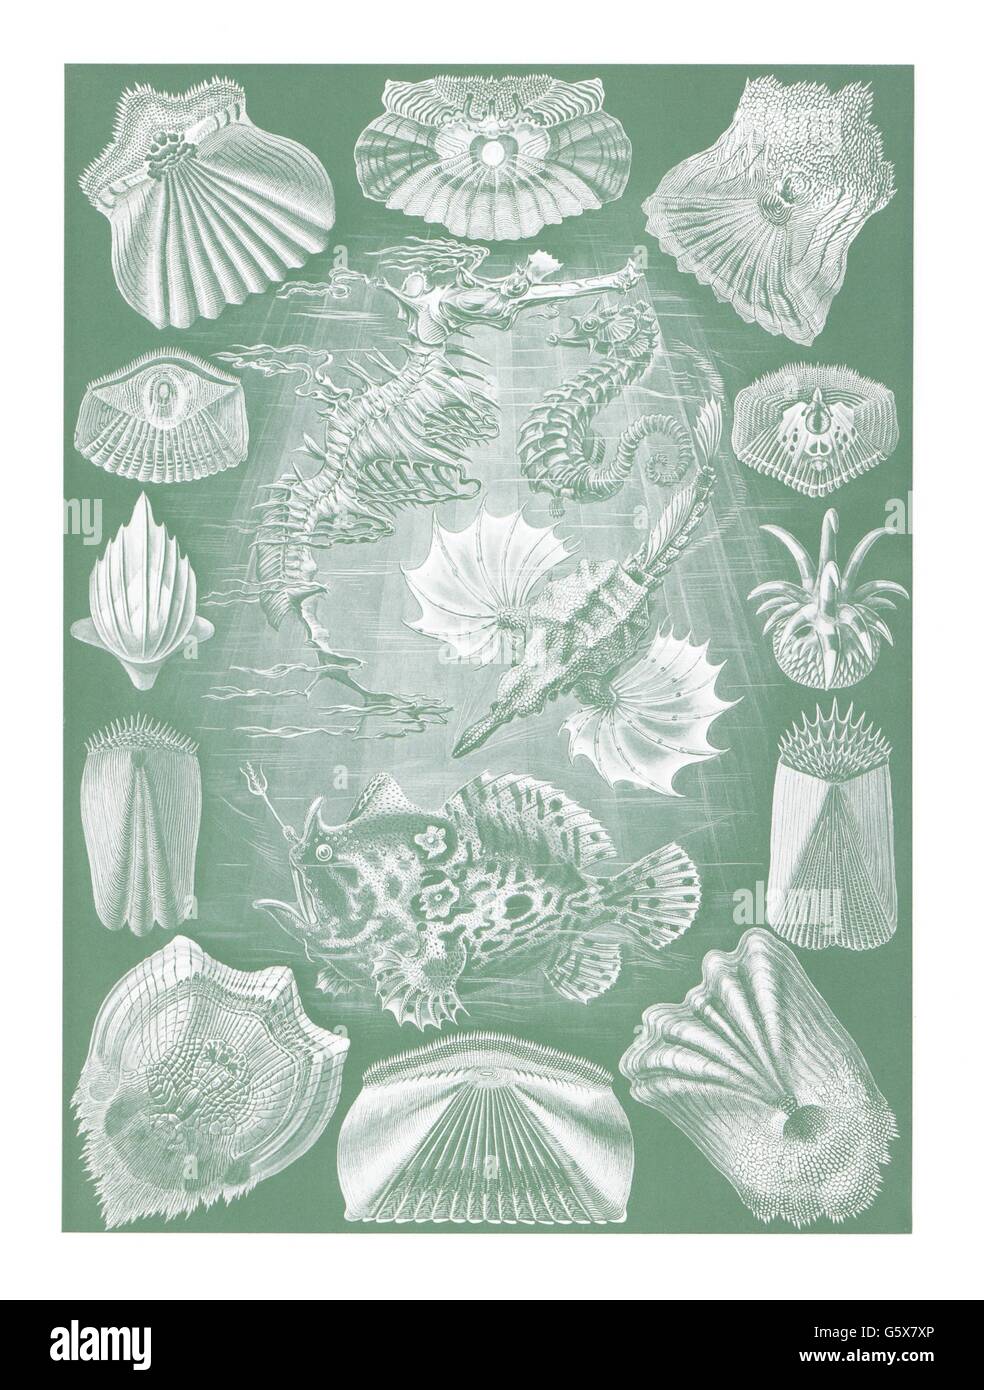 zoologie / Tiere, Knochenfische (Osteichthyes), Farblithographie, aus: Ernst Haeckel, 'Kunstformen der Natur', Leipzig - Wien, 1899 - 1904, Additional-Rights-Clearences-not available Stockfoto